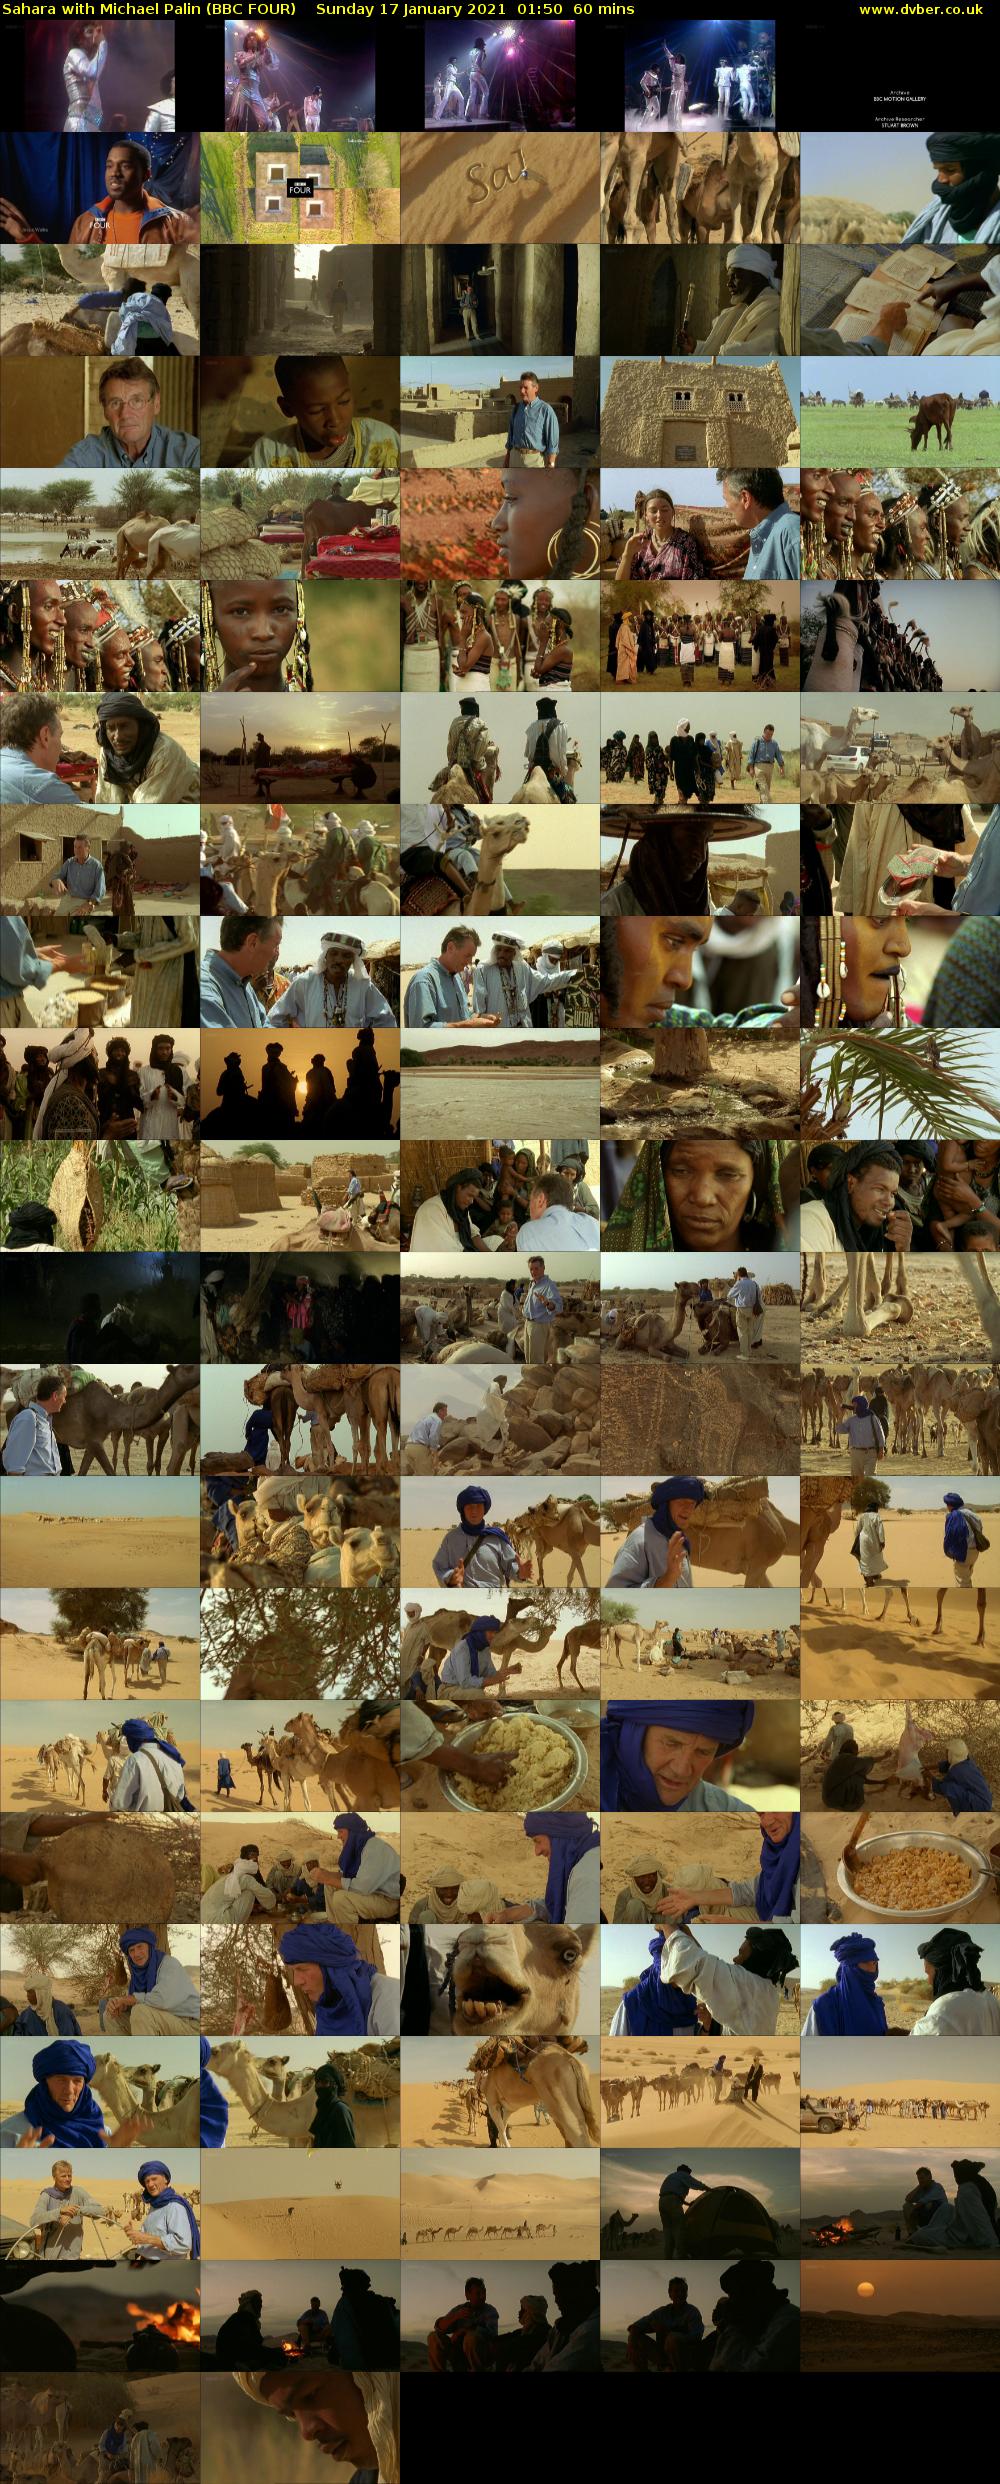 Sahara with Michael Palin (BBC FOUR) Sunday 17 January 2021 01:50 - 02:50